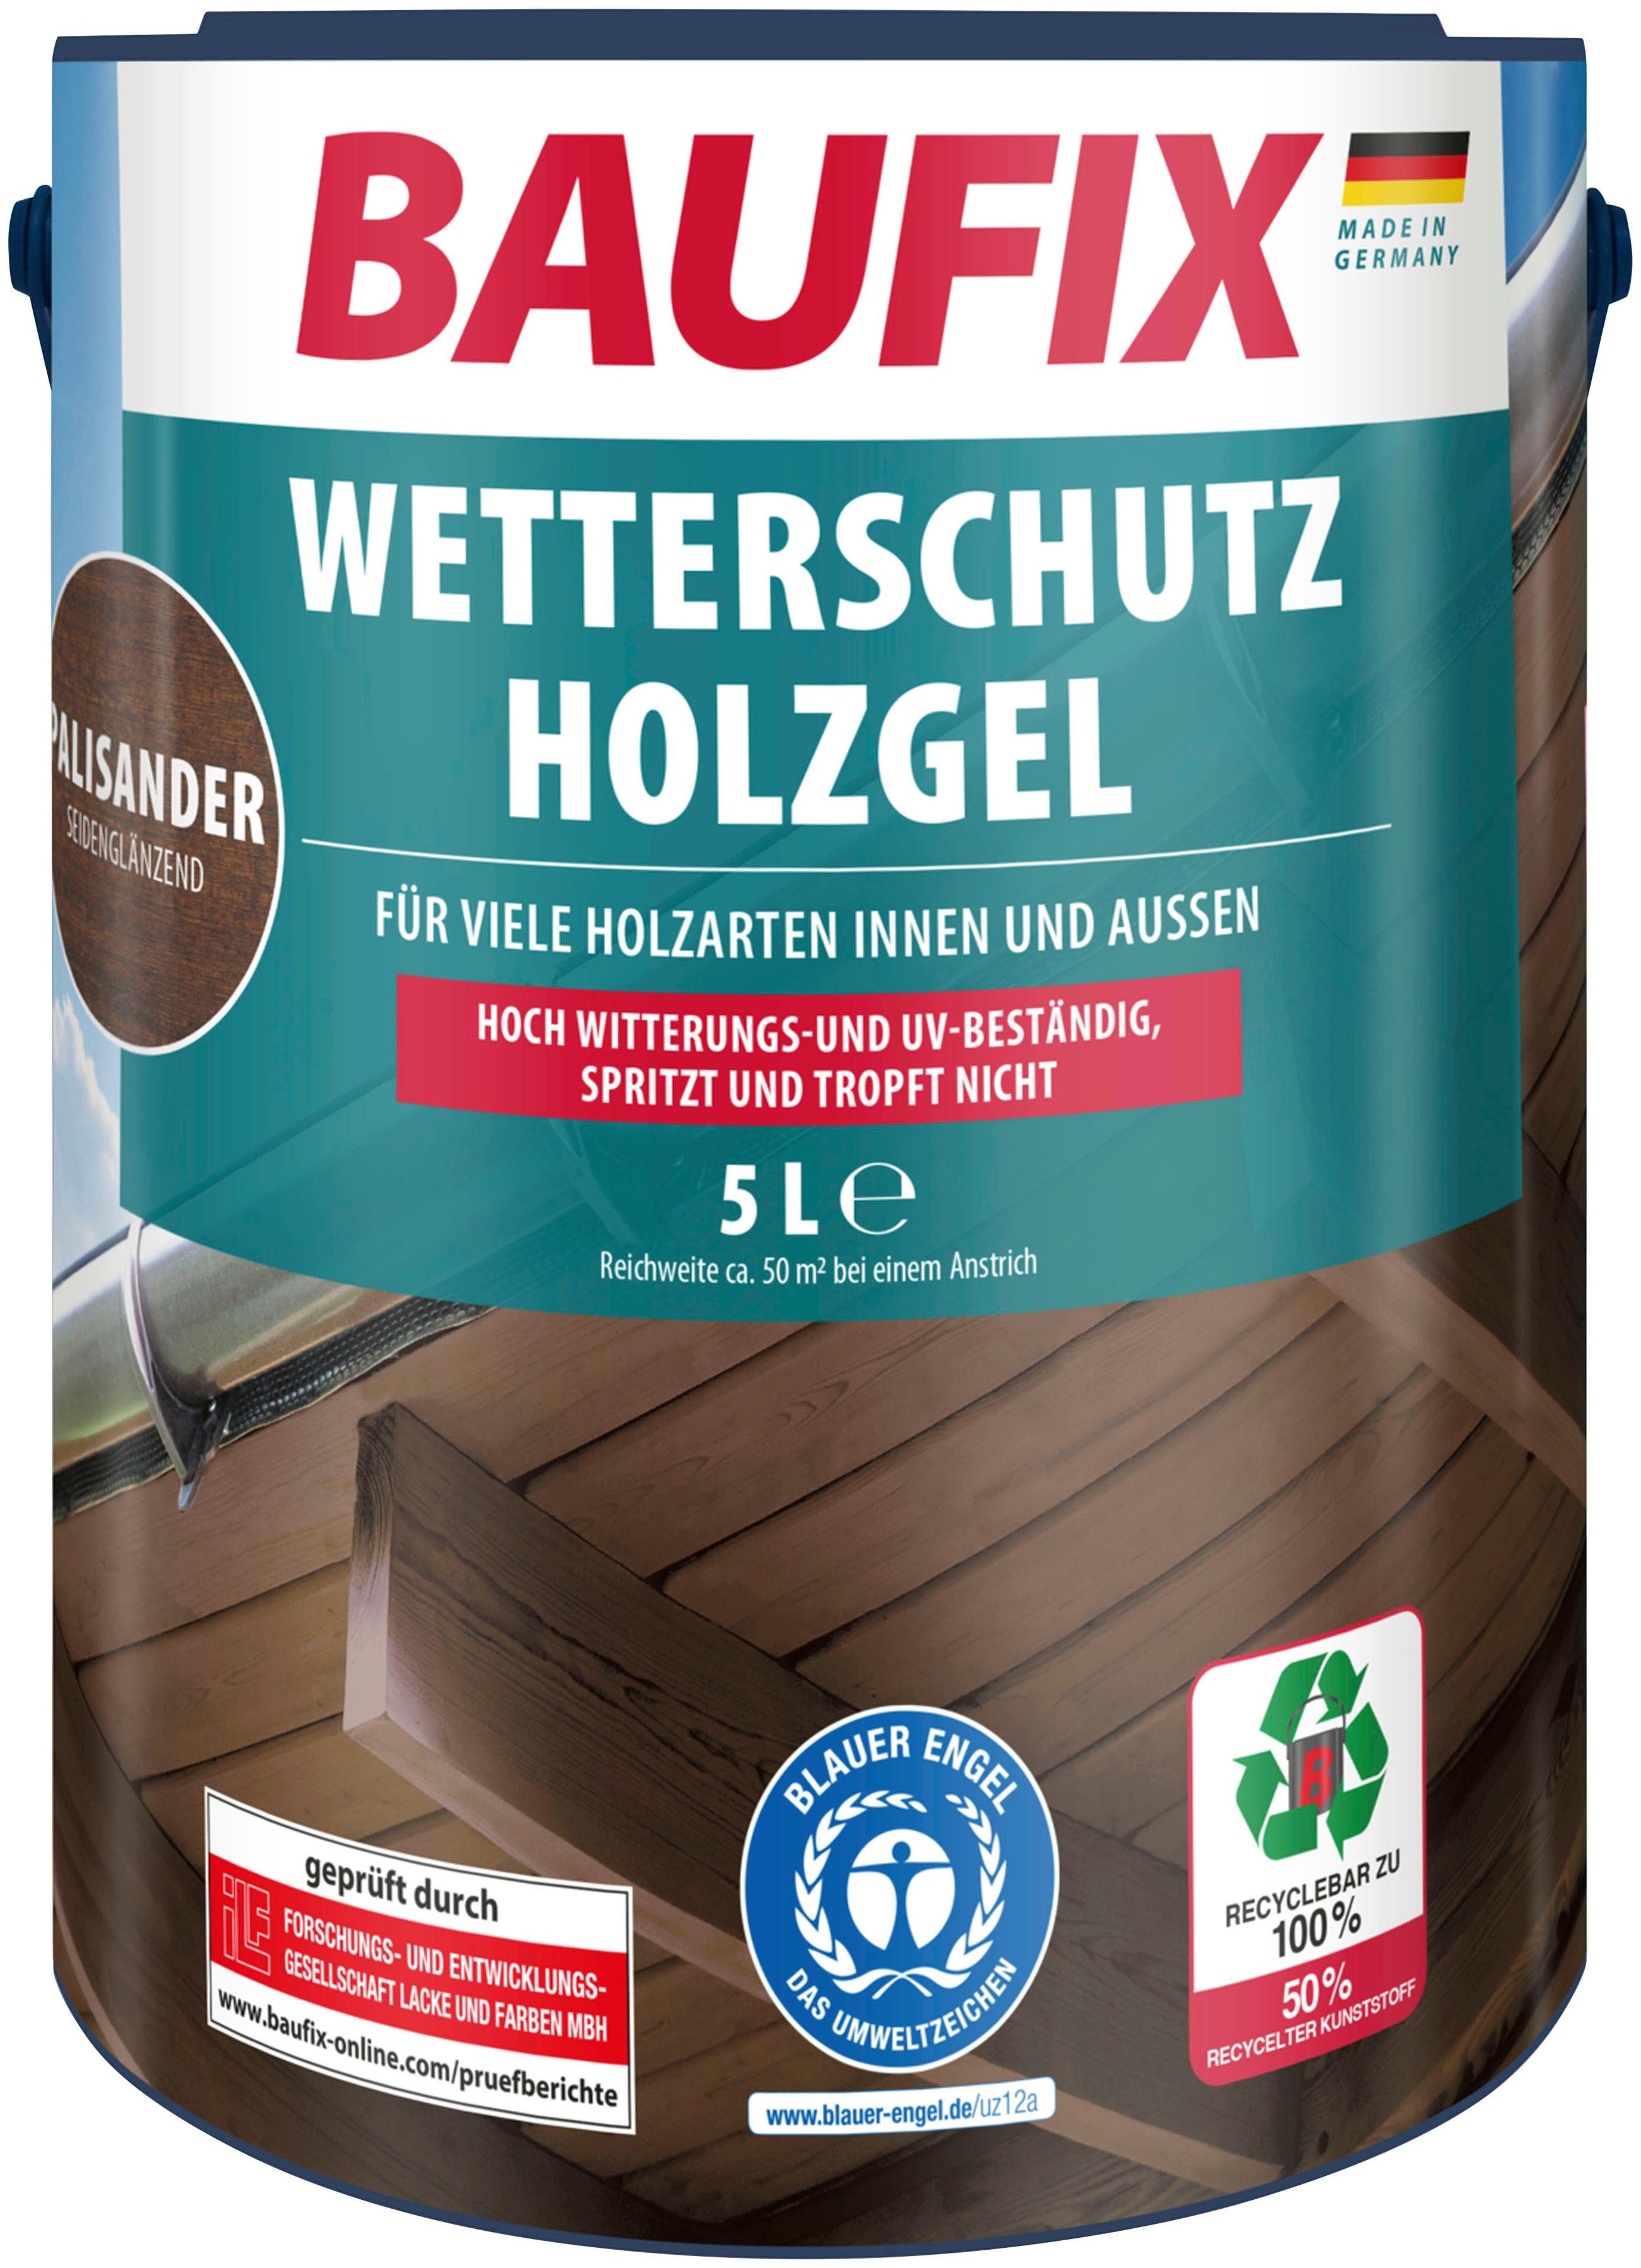 Baufix Holzschutzlasur Wetterschutz-Holzgel, wetterbeständig, UV beständig, palisander seidenglänzend atmungsaktiv, 5L